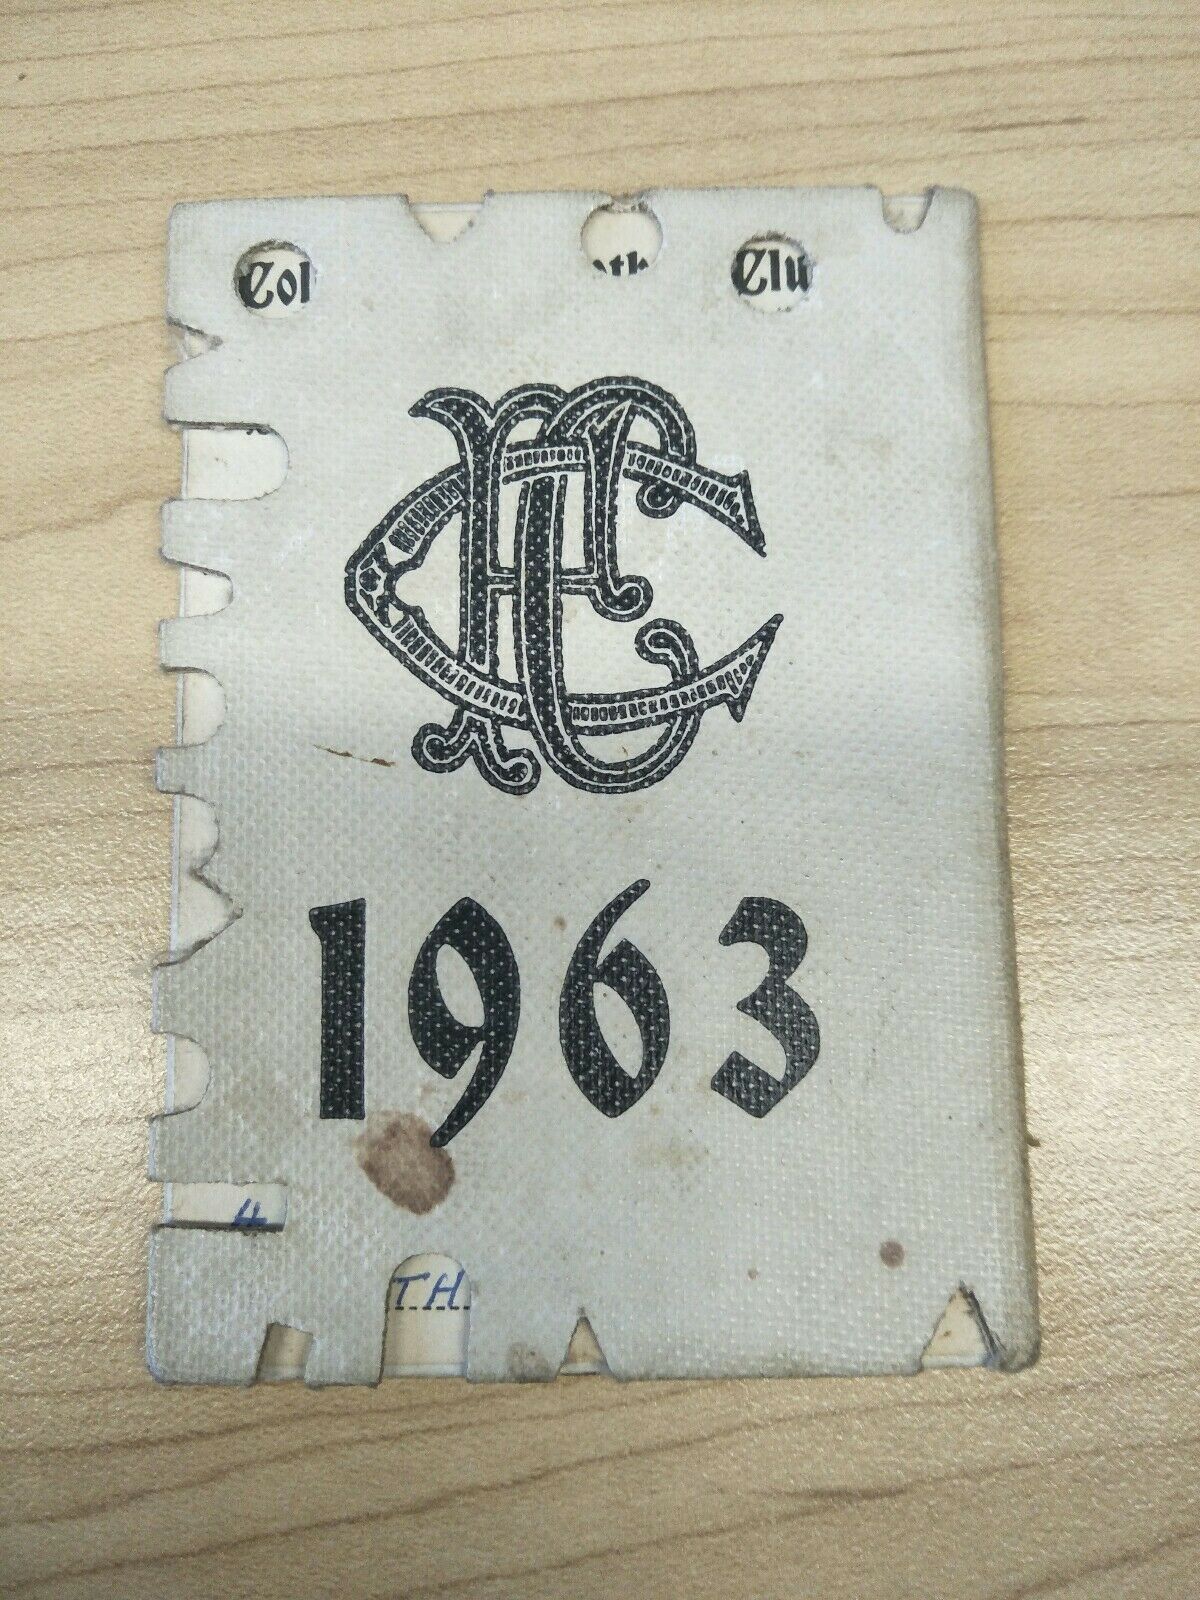 VFL 1963 Collingwood Football Club Season Ticket No. 6472